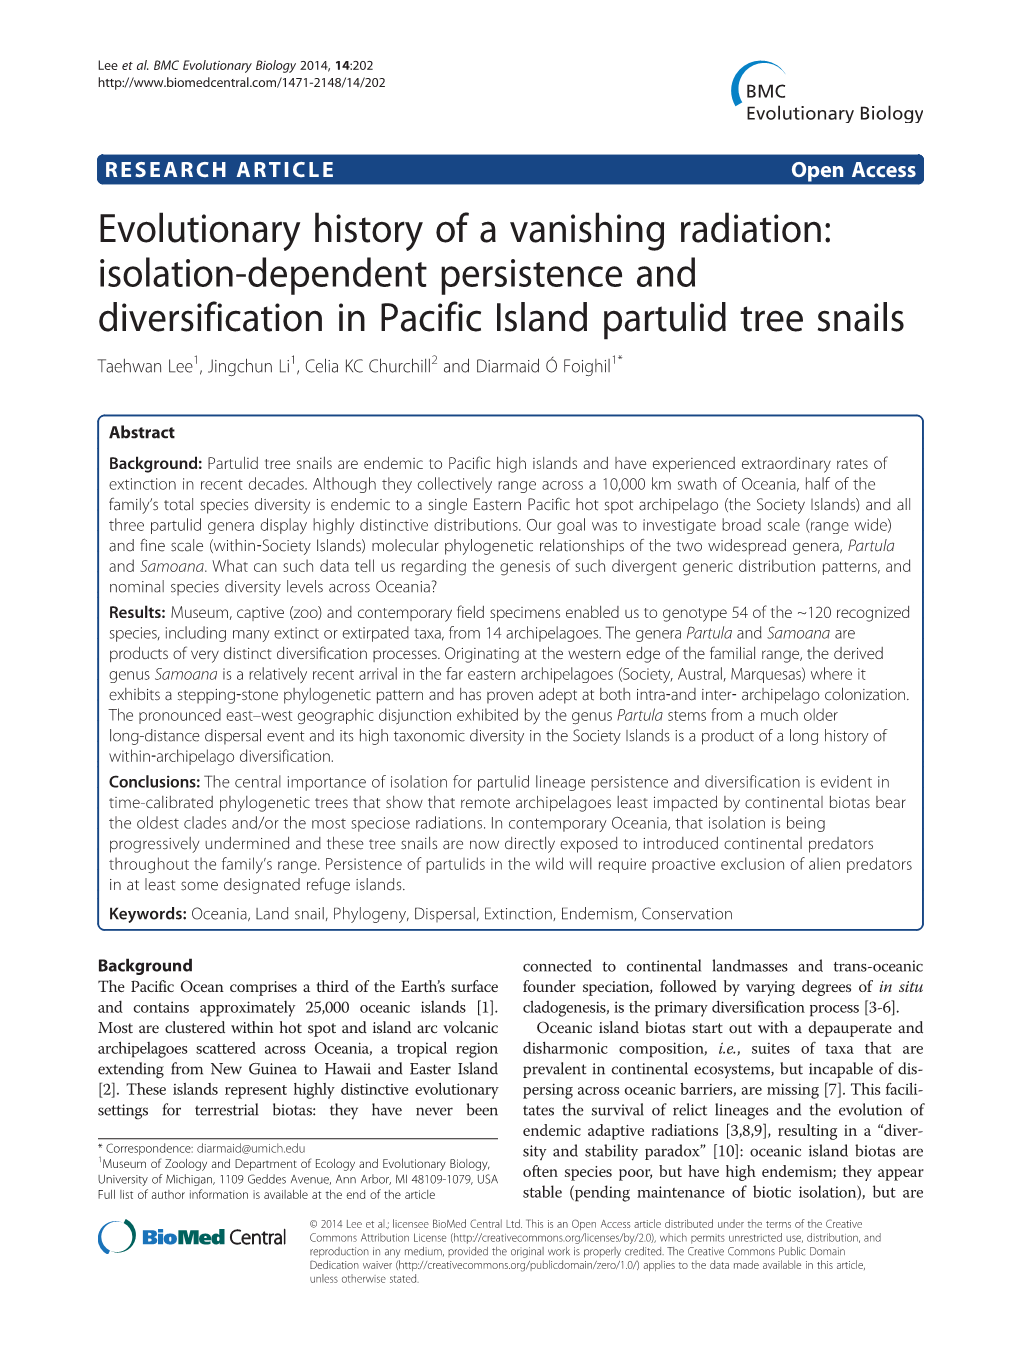 Evolutionary History of a Vanishing Radiation: Isolation-Dependent